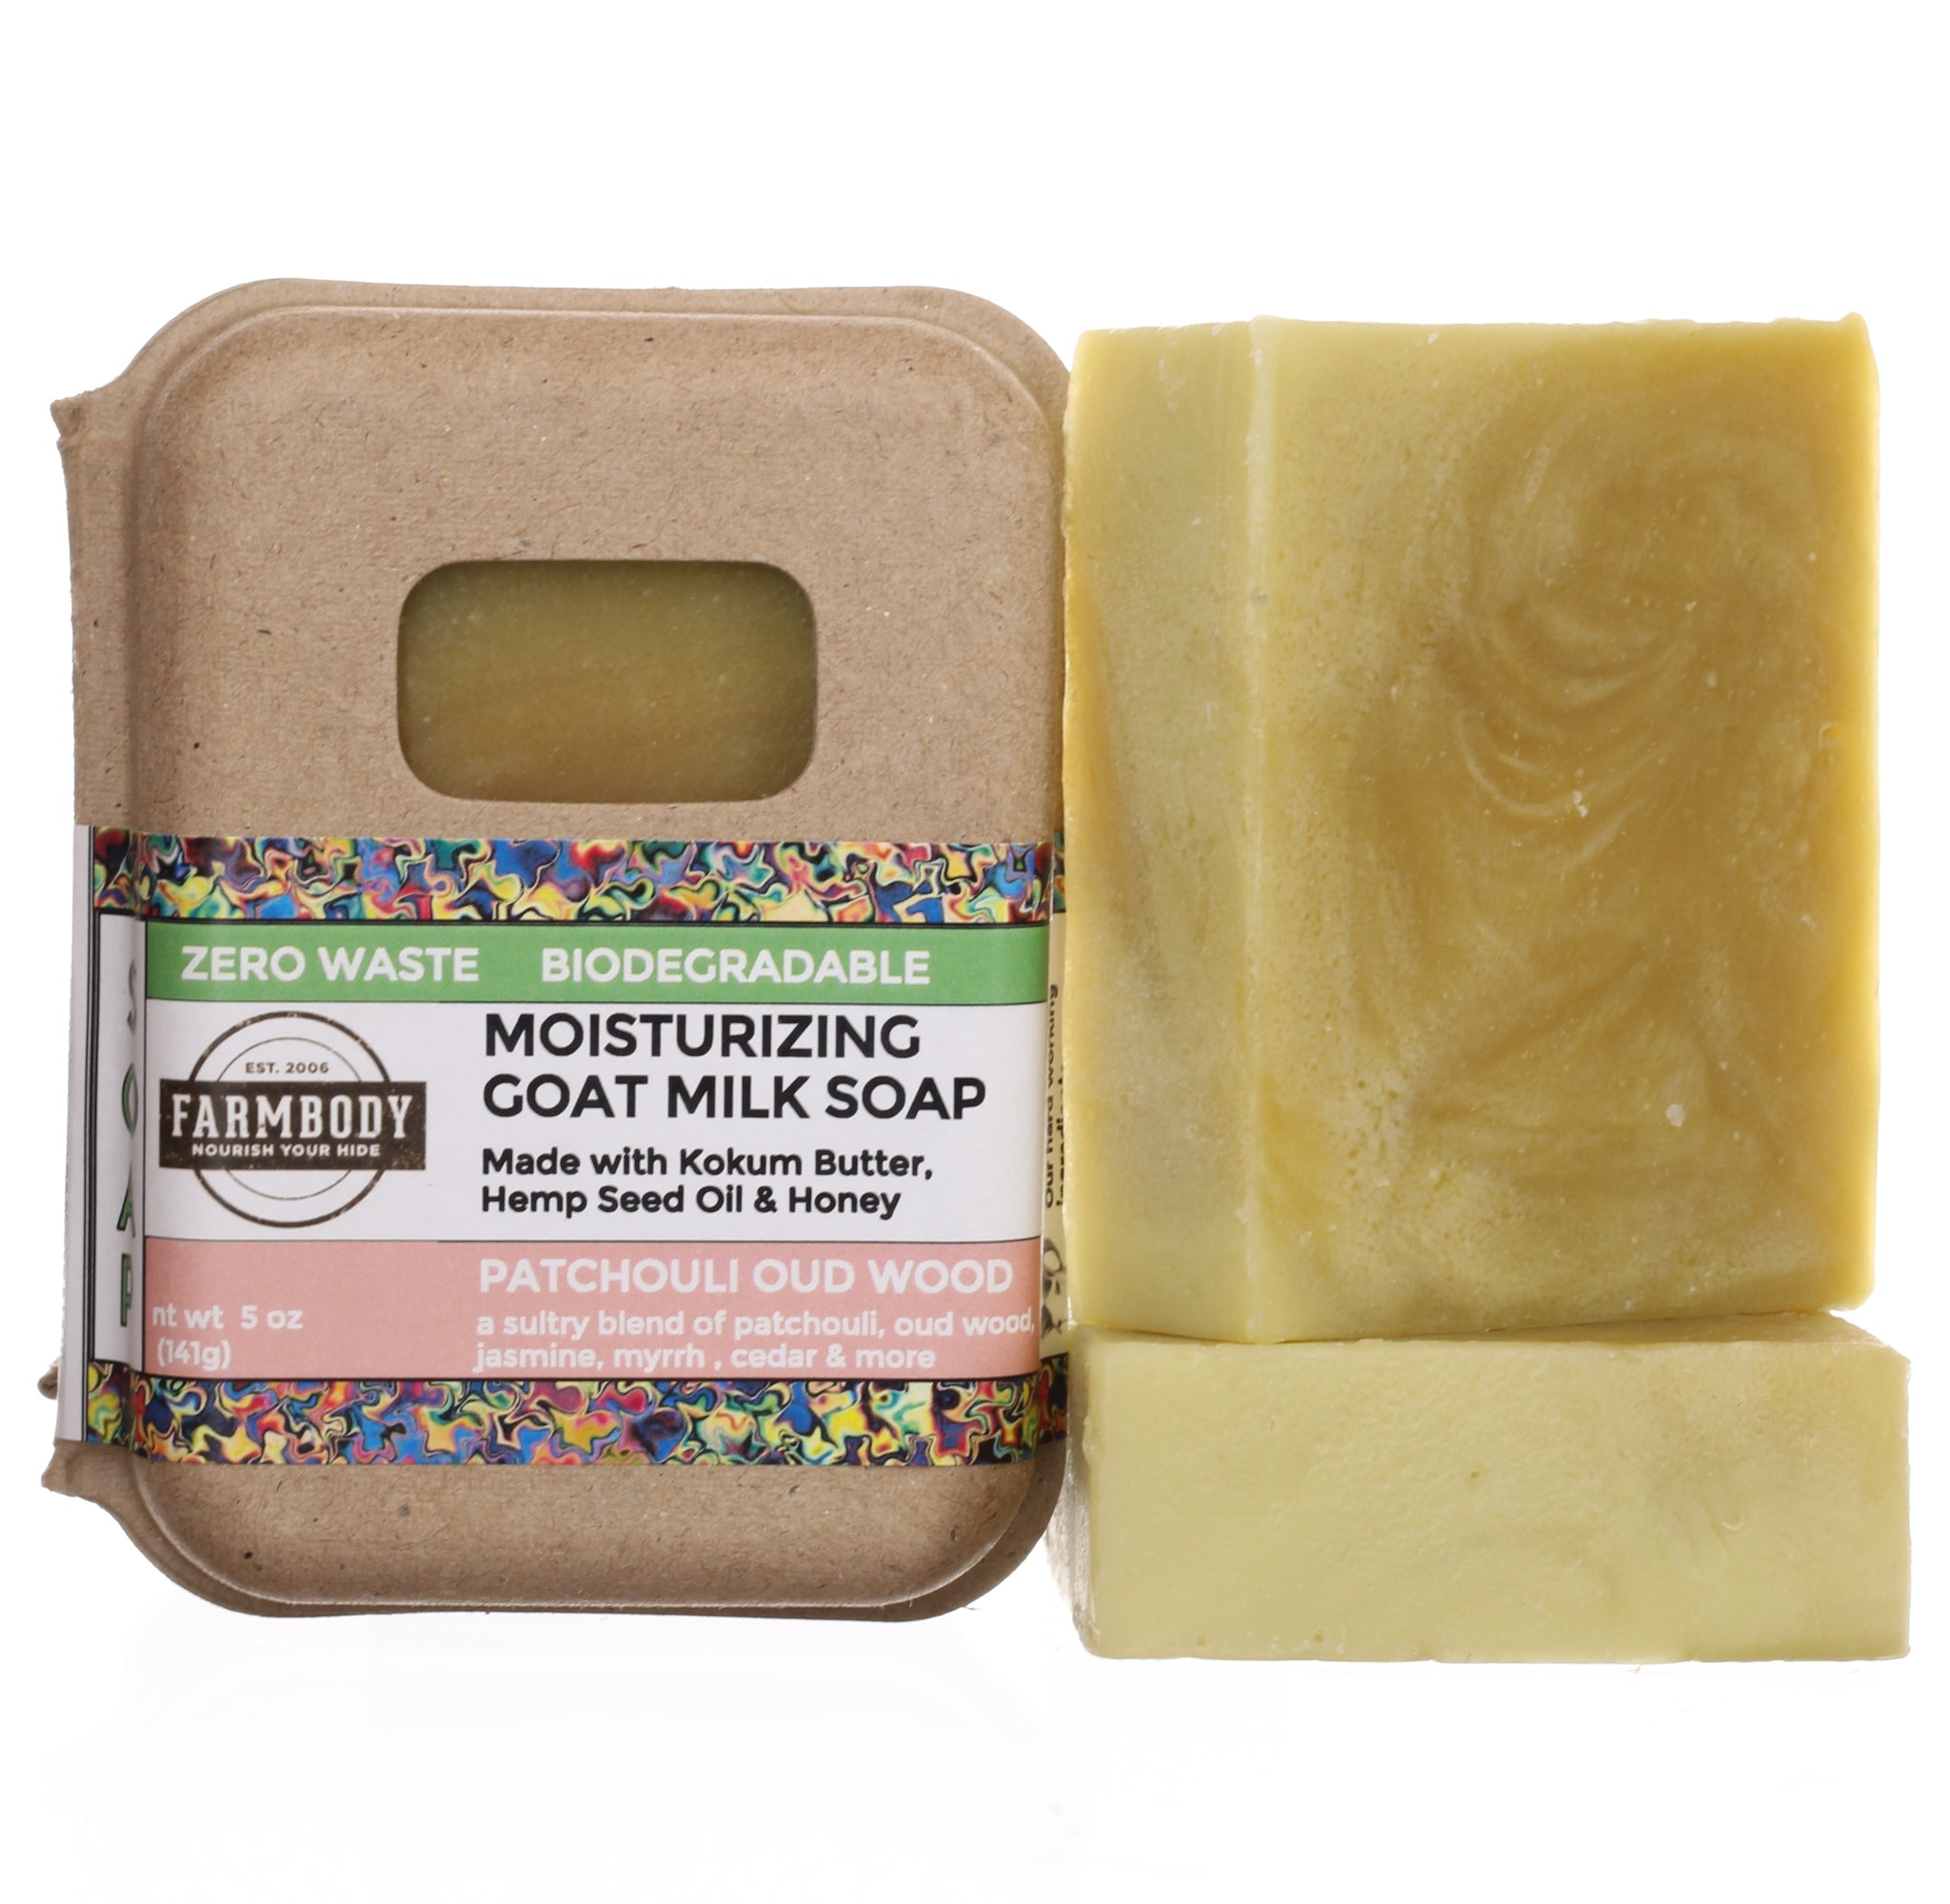 Moisturizing Goat Milk Bar Soap for Sensitive Skin | PATCHOULI OUD WOOD - Farmbody